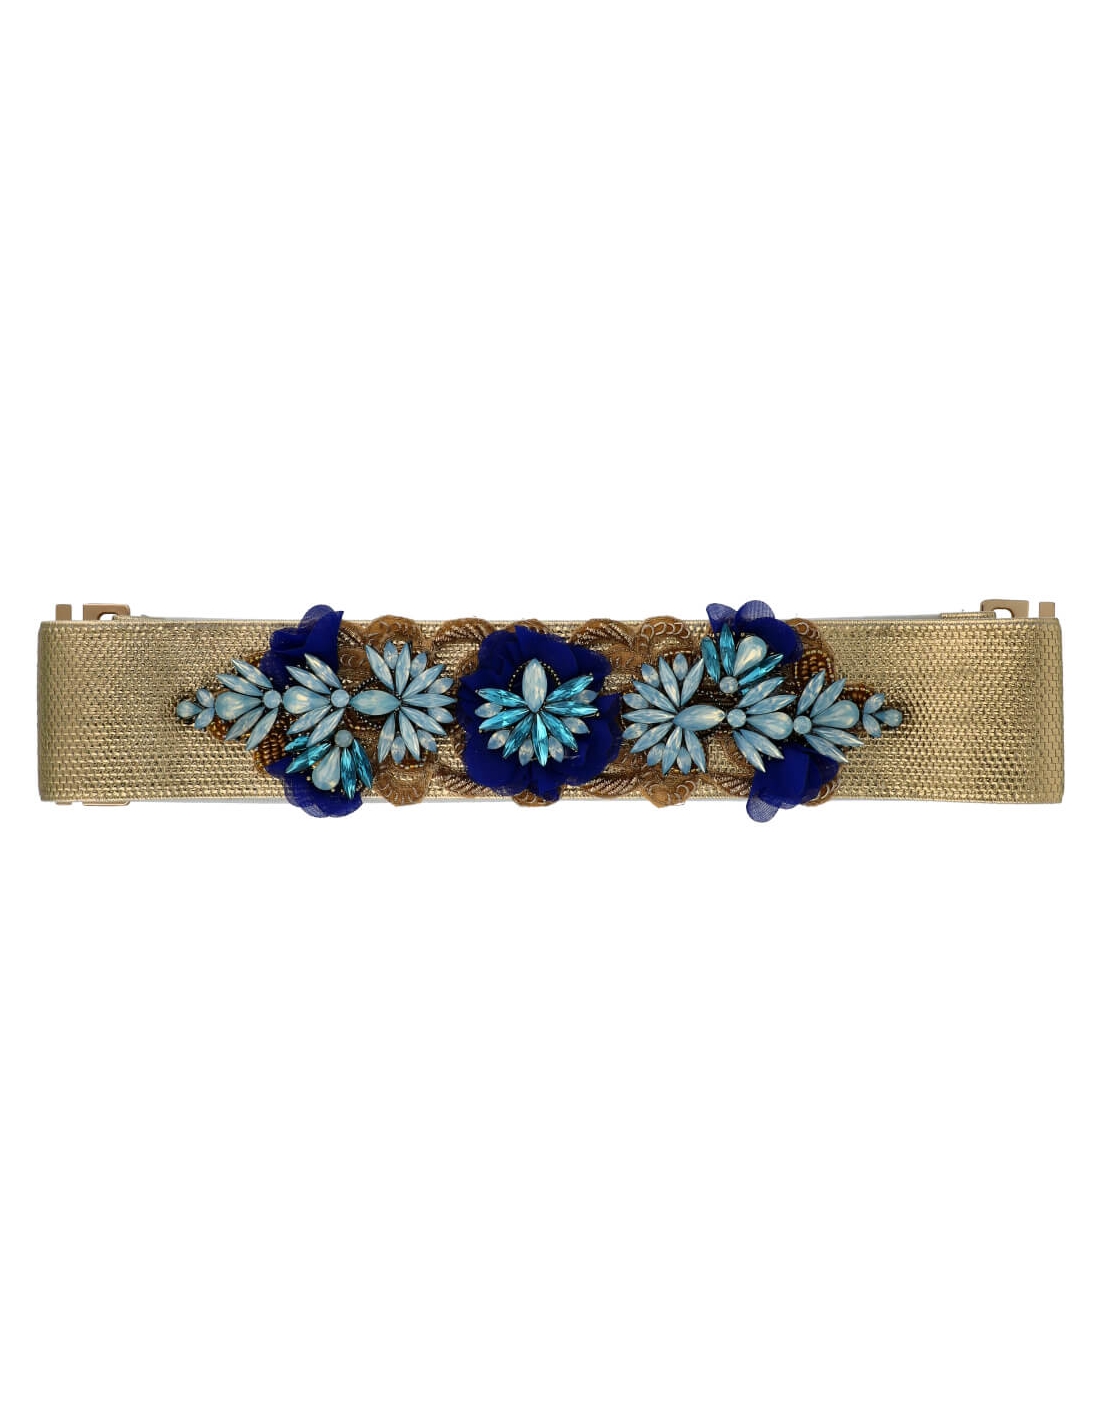 Cinturón de Fiesta Azul Saray - Cinturones para Vestidos - Flormoda